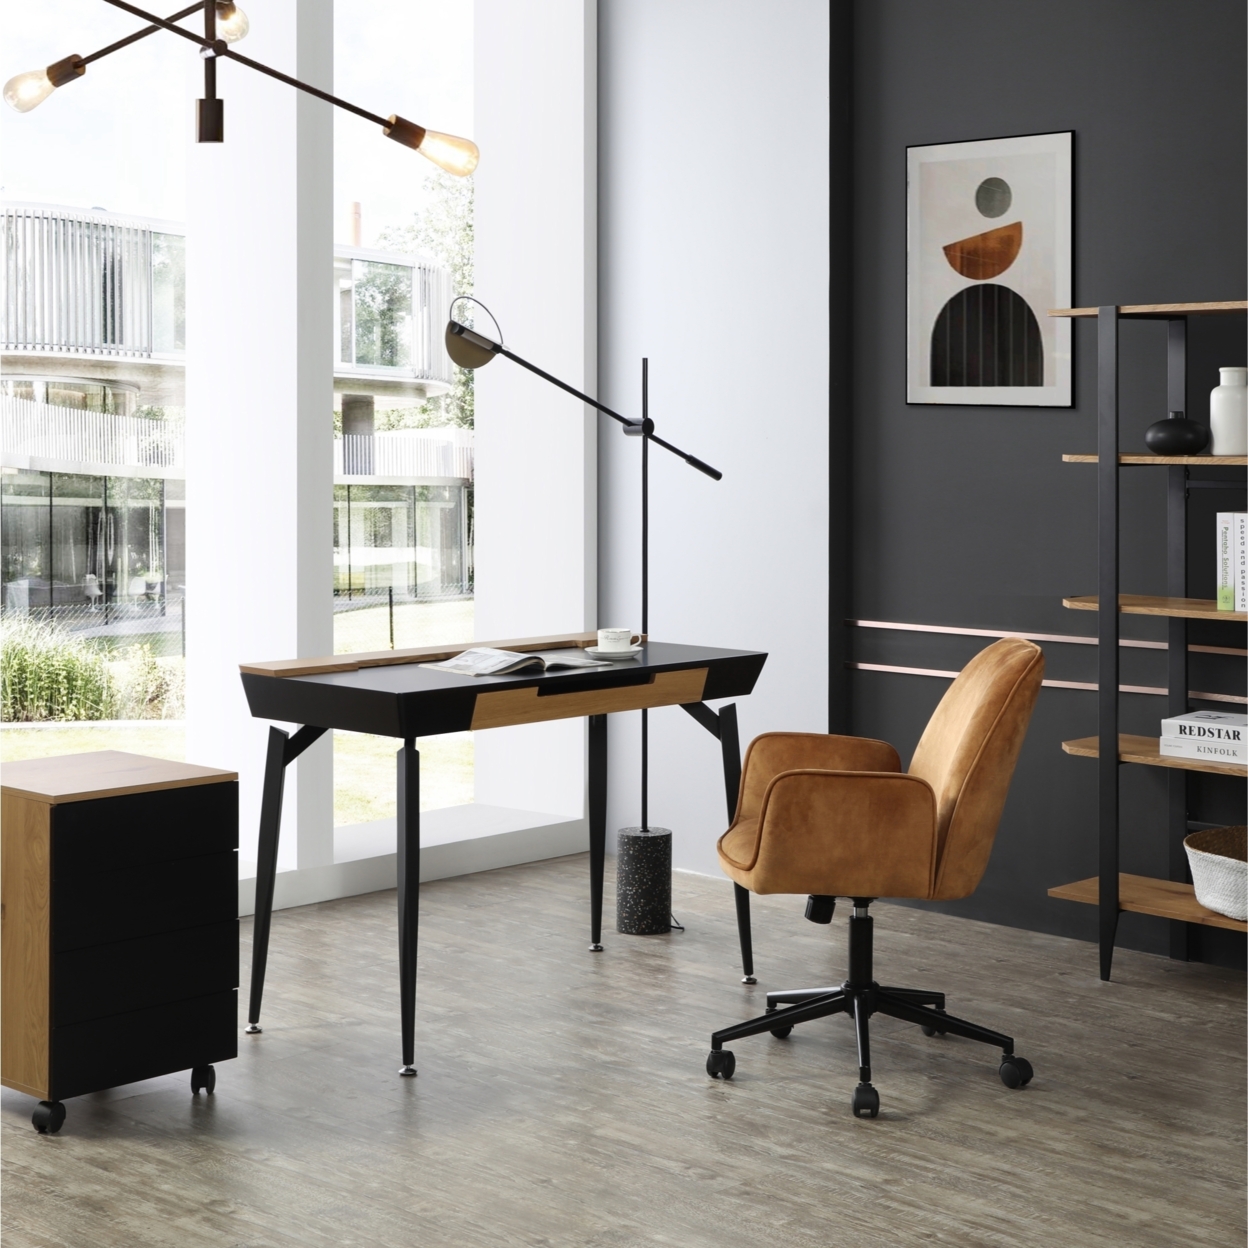 Carmela Desk-3 Storage Drawers, Extra Storage on Top-Adjustable Foot Pads-Cable Management - black/natural